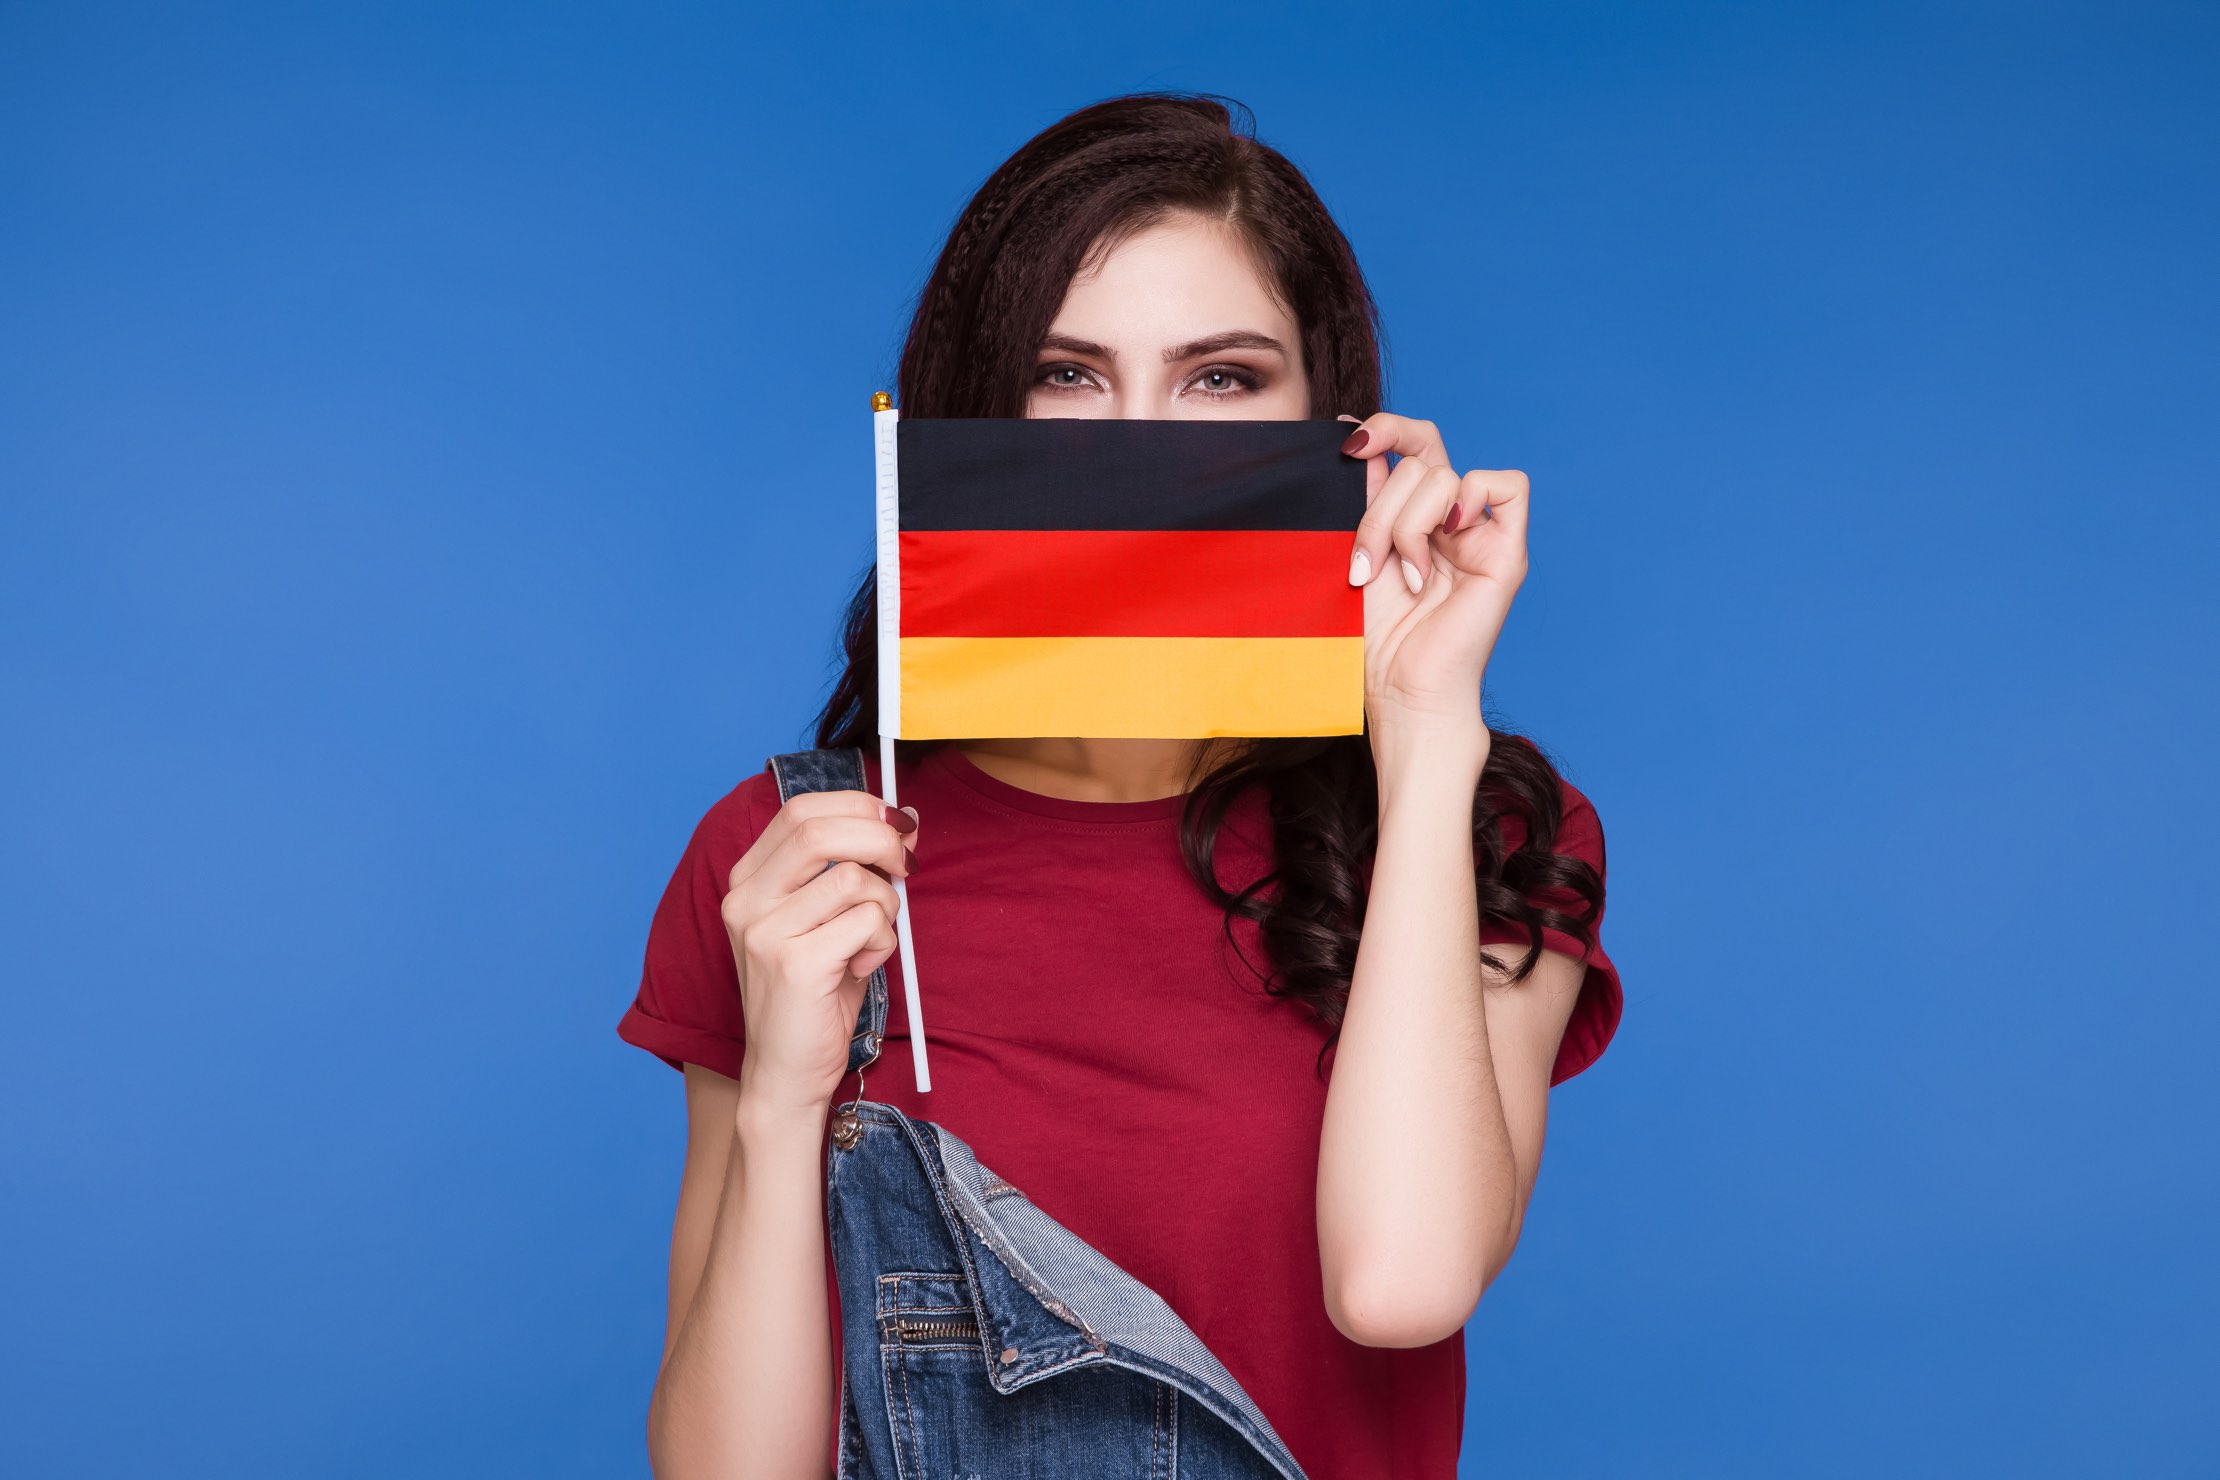 German Legal Translation Dubai